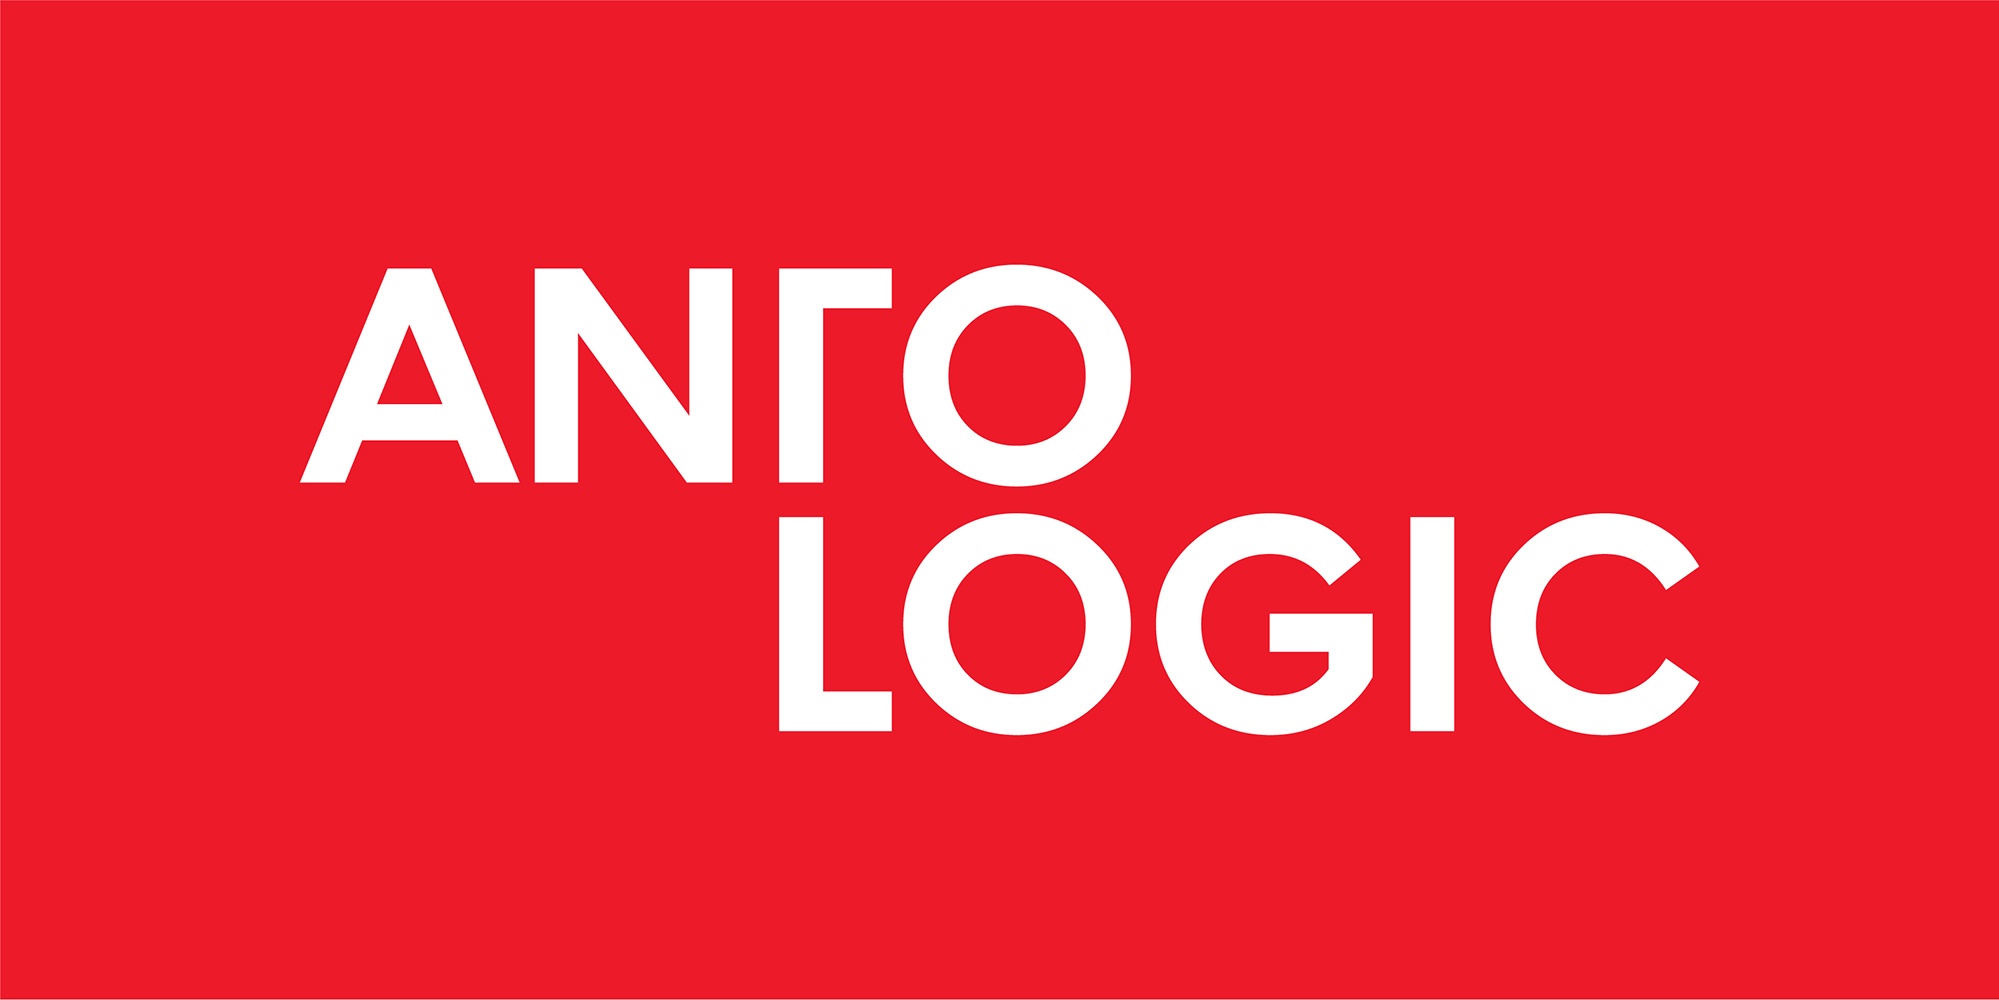 Antologic logo